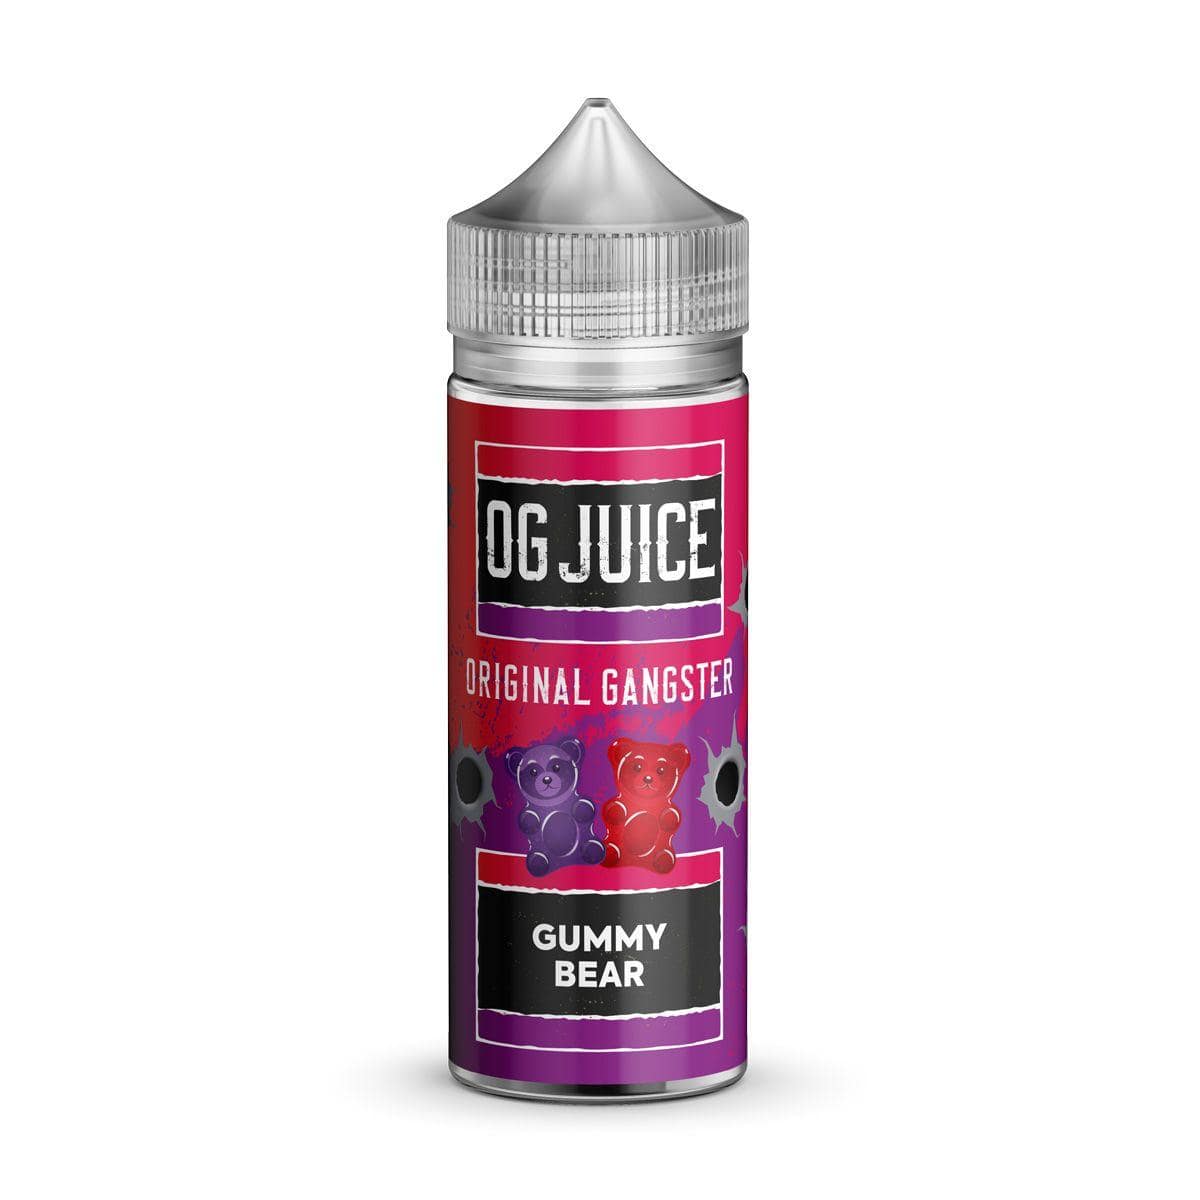 OG Juice Original Gangster - Gummy Bear - 100ml E-liquid Shortfill - Mcr Vape Distro